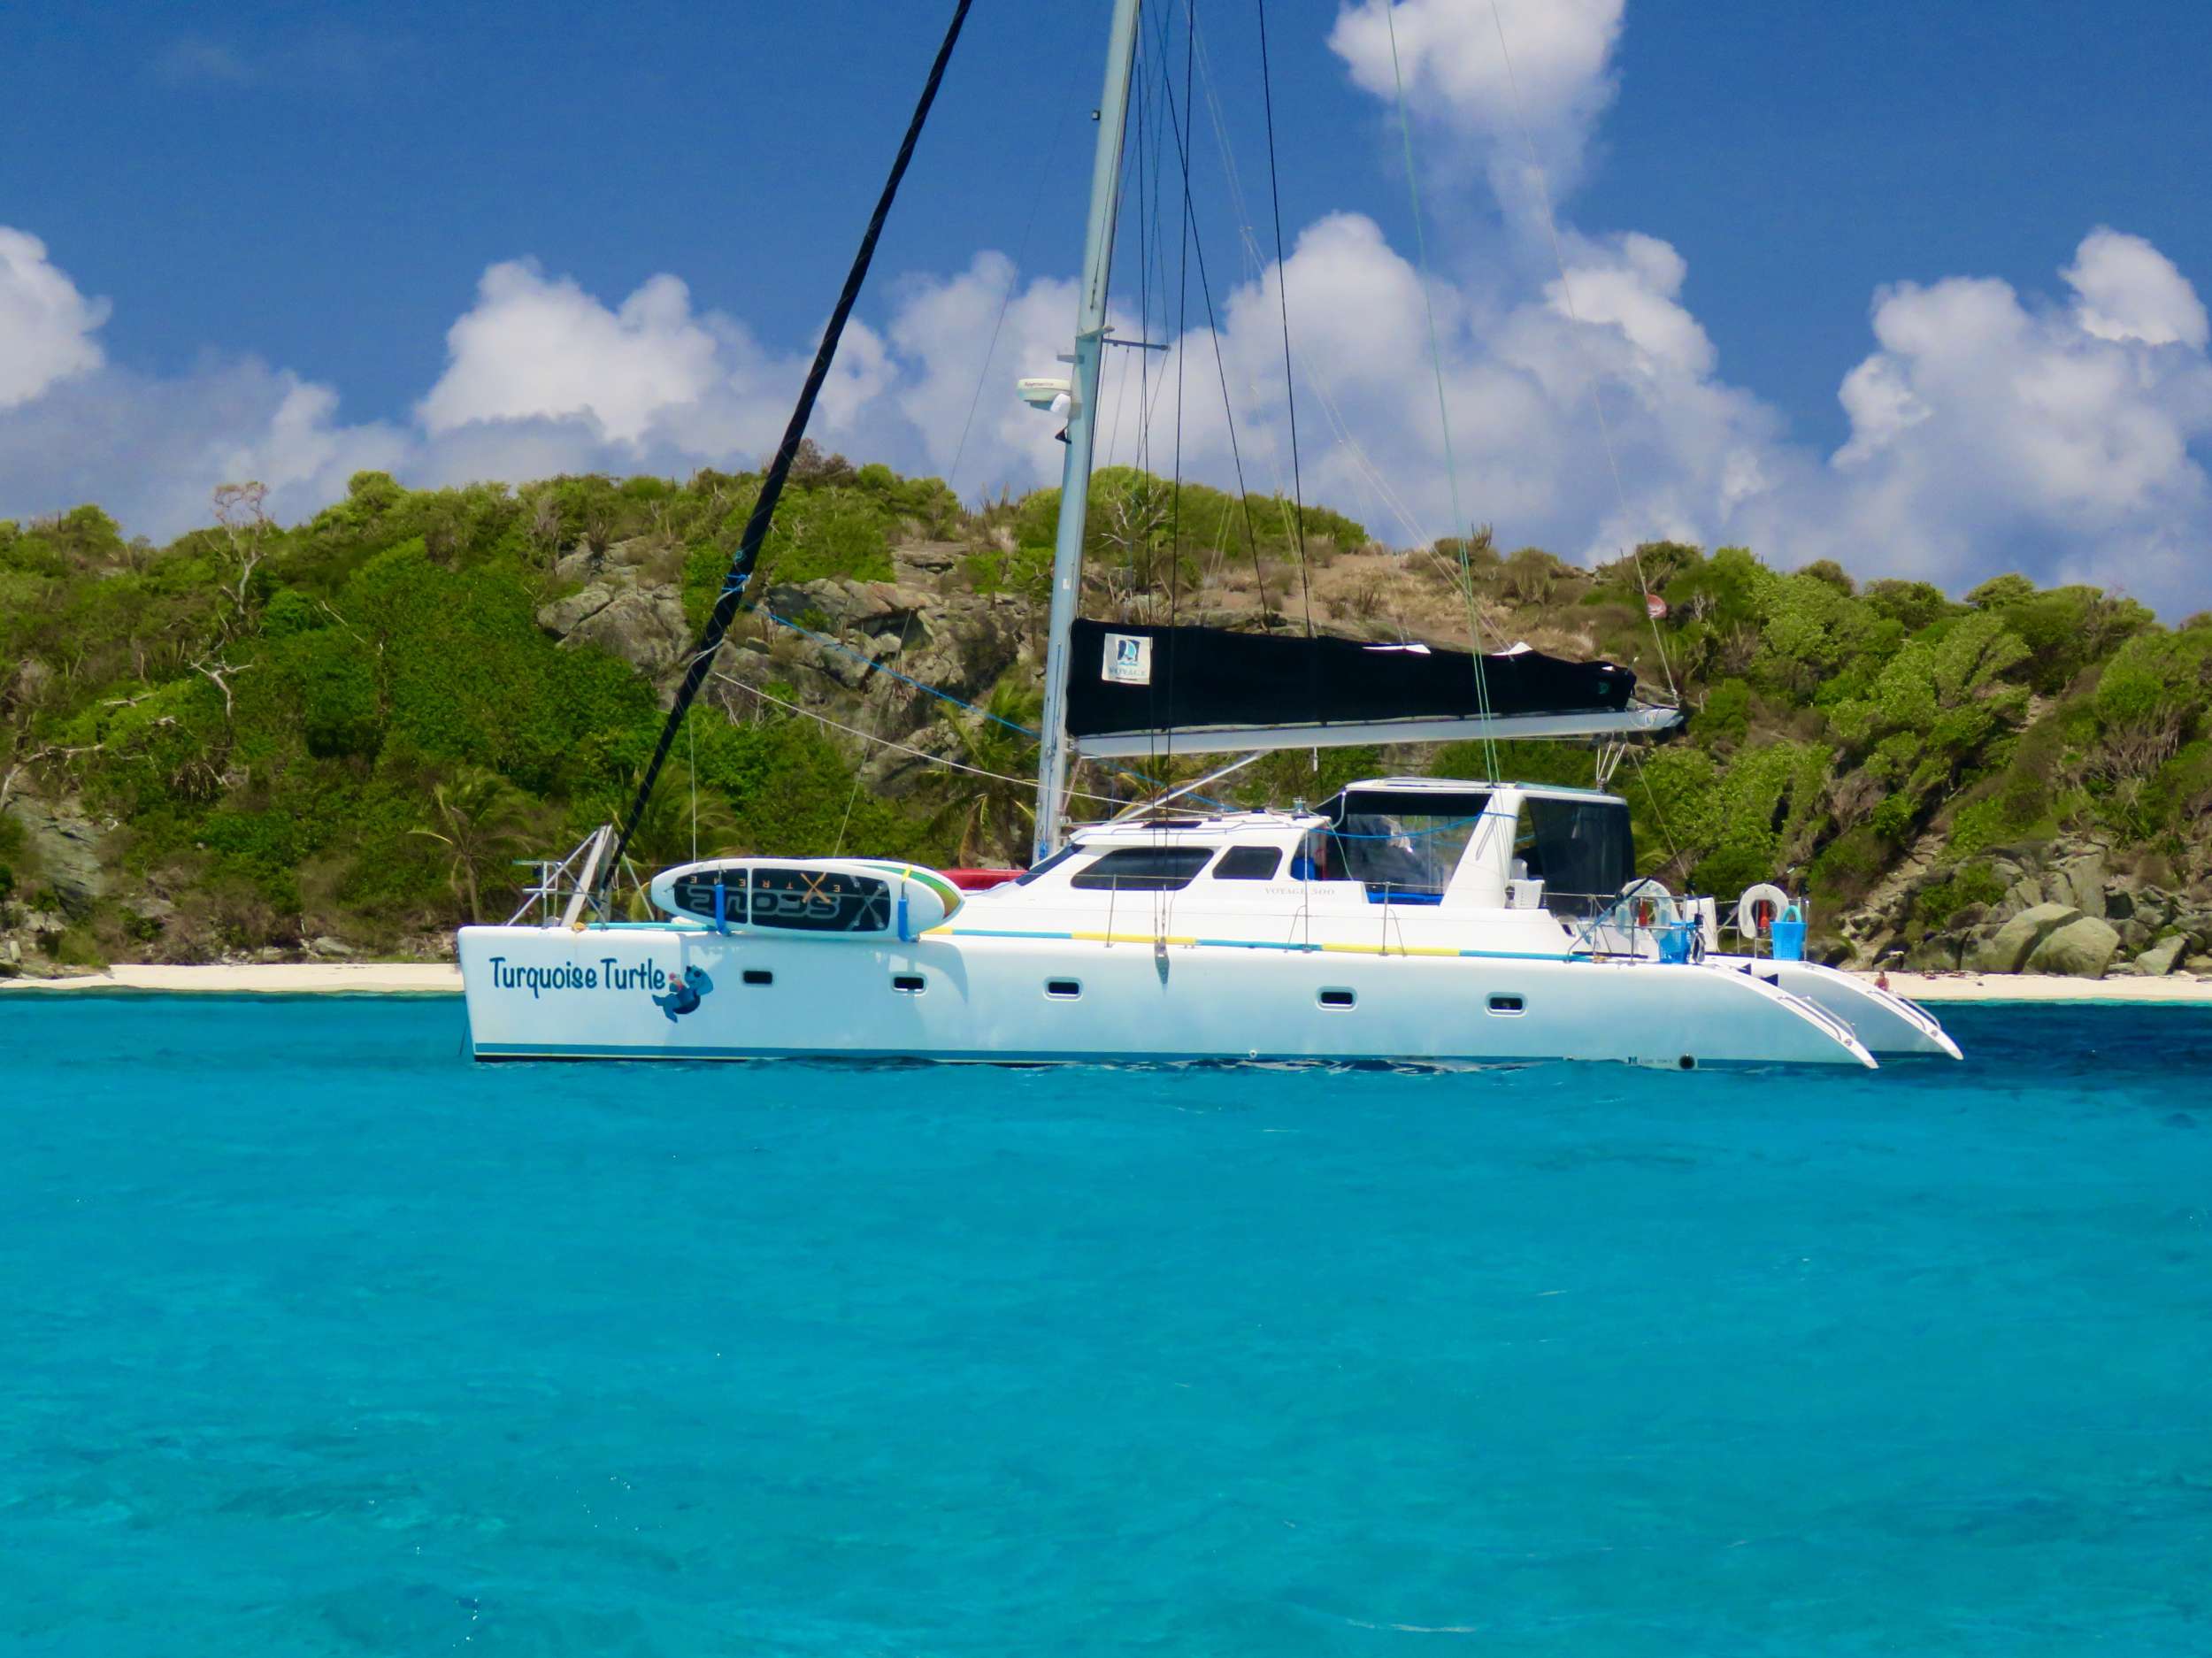 Turquoise Turtle Crewed Voyage 500 Catamaran Discount Sailing the Grenadines.